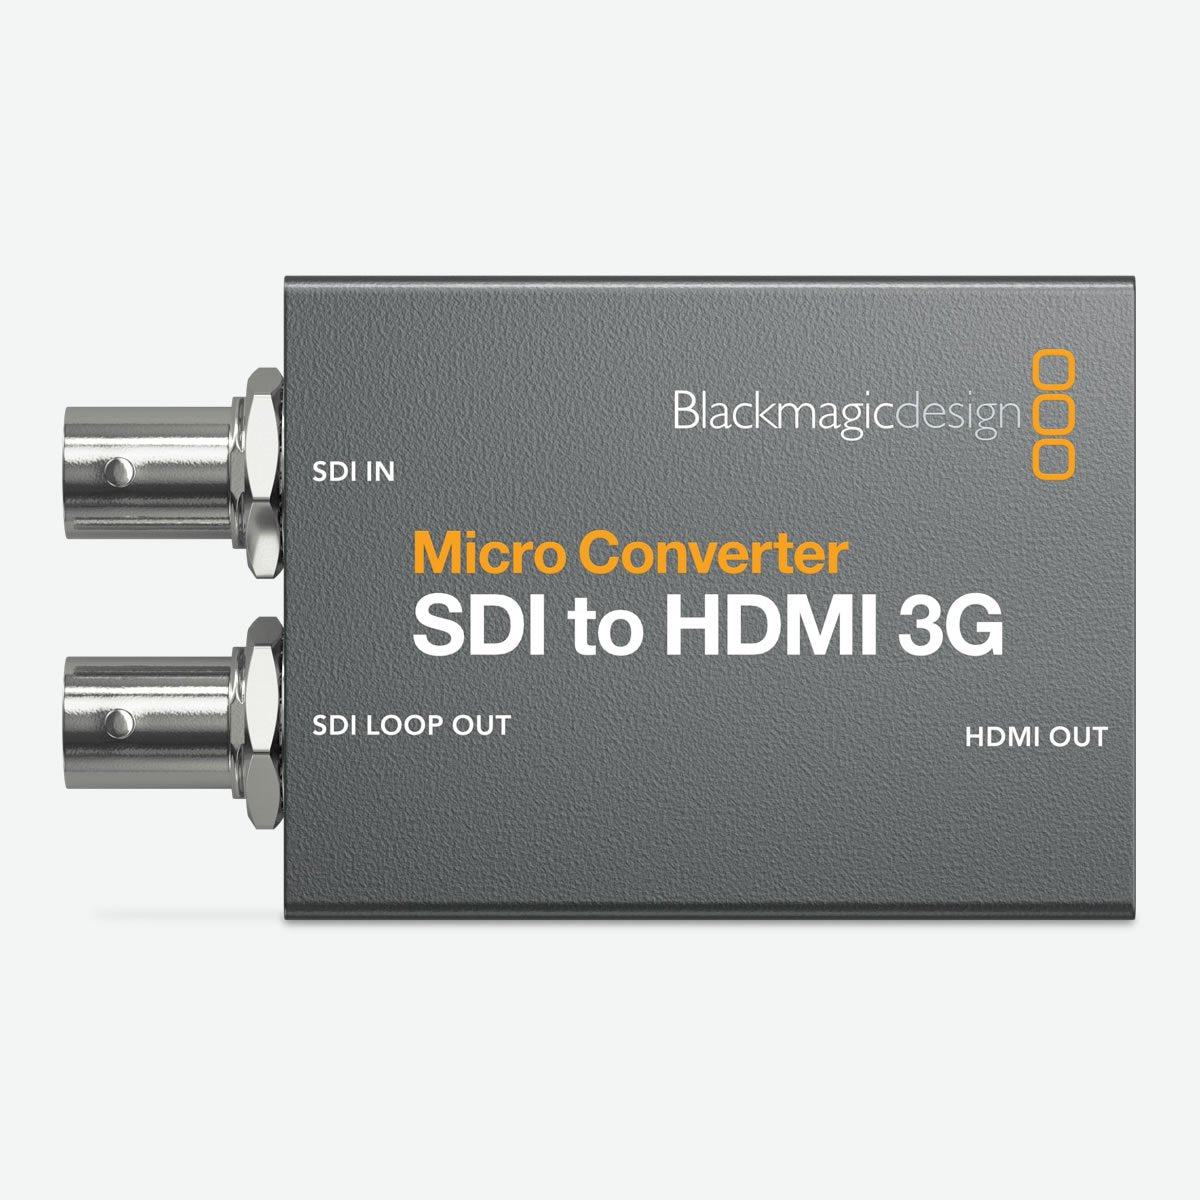 Blackmagicdesign(ブラックマジックデザイン) コンバーター(ACアダプター付)  Micro Converter SDI to HDMI 3G PSU CONVCMIC/SH03G/WPSU